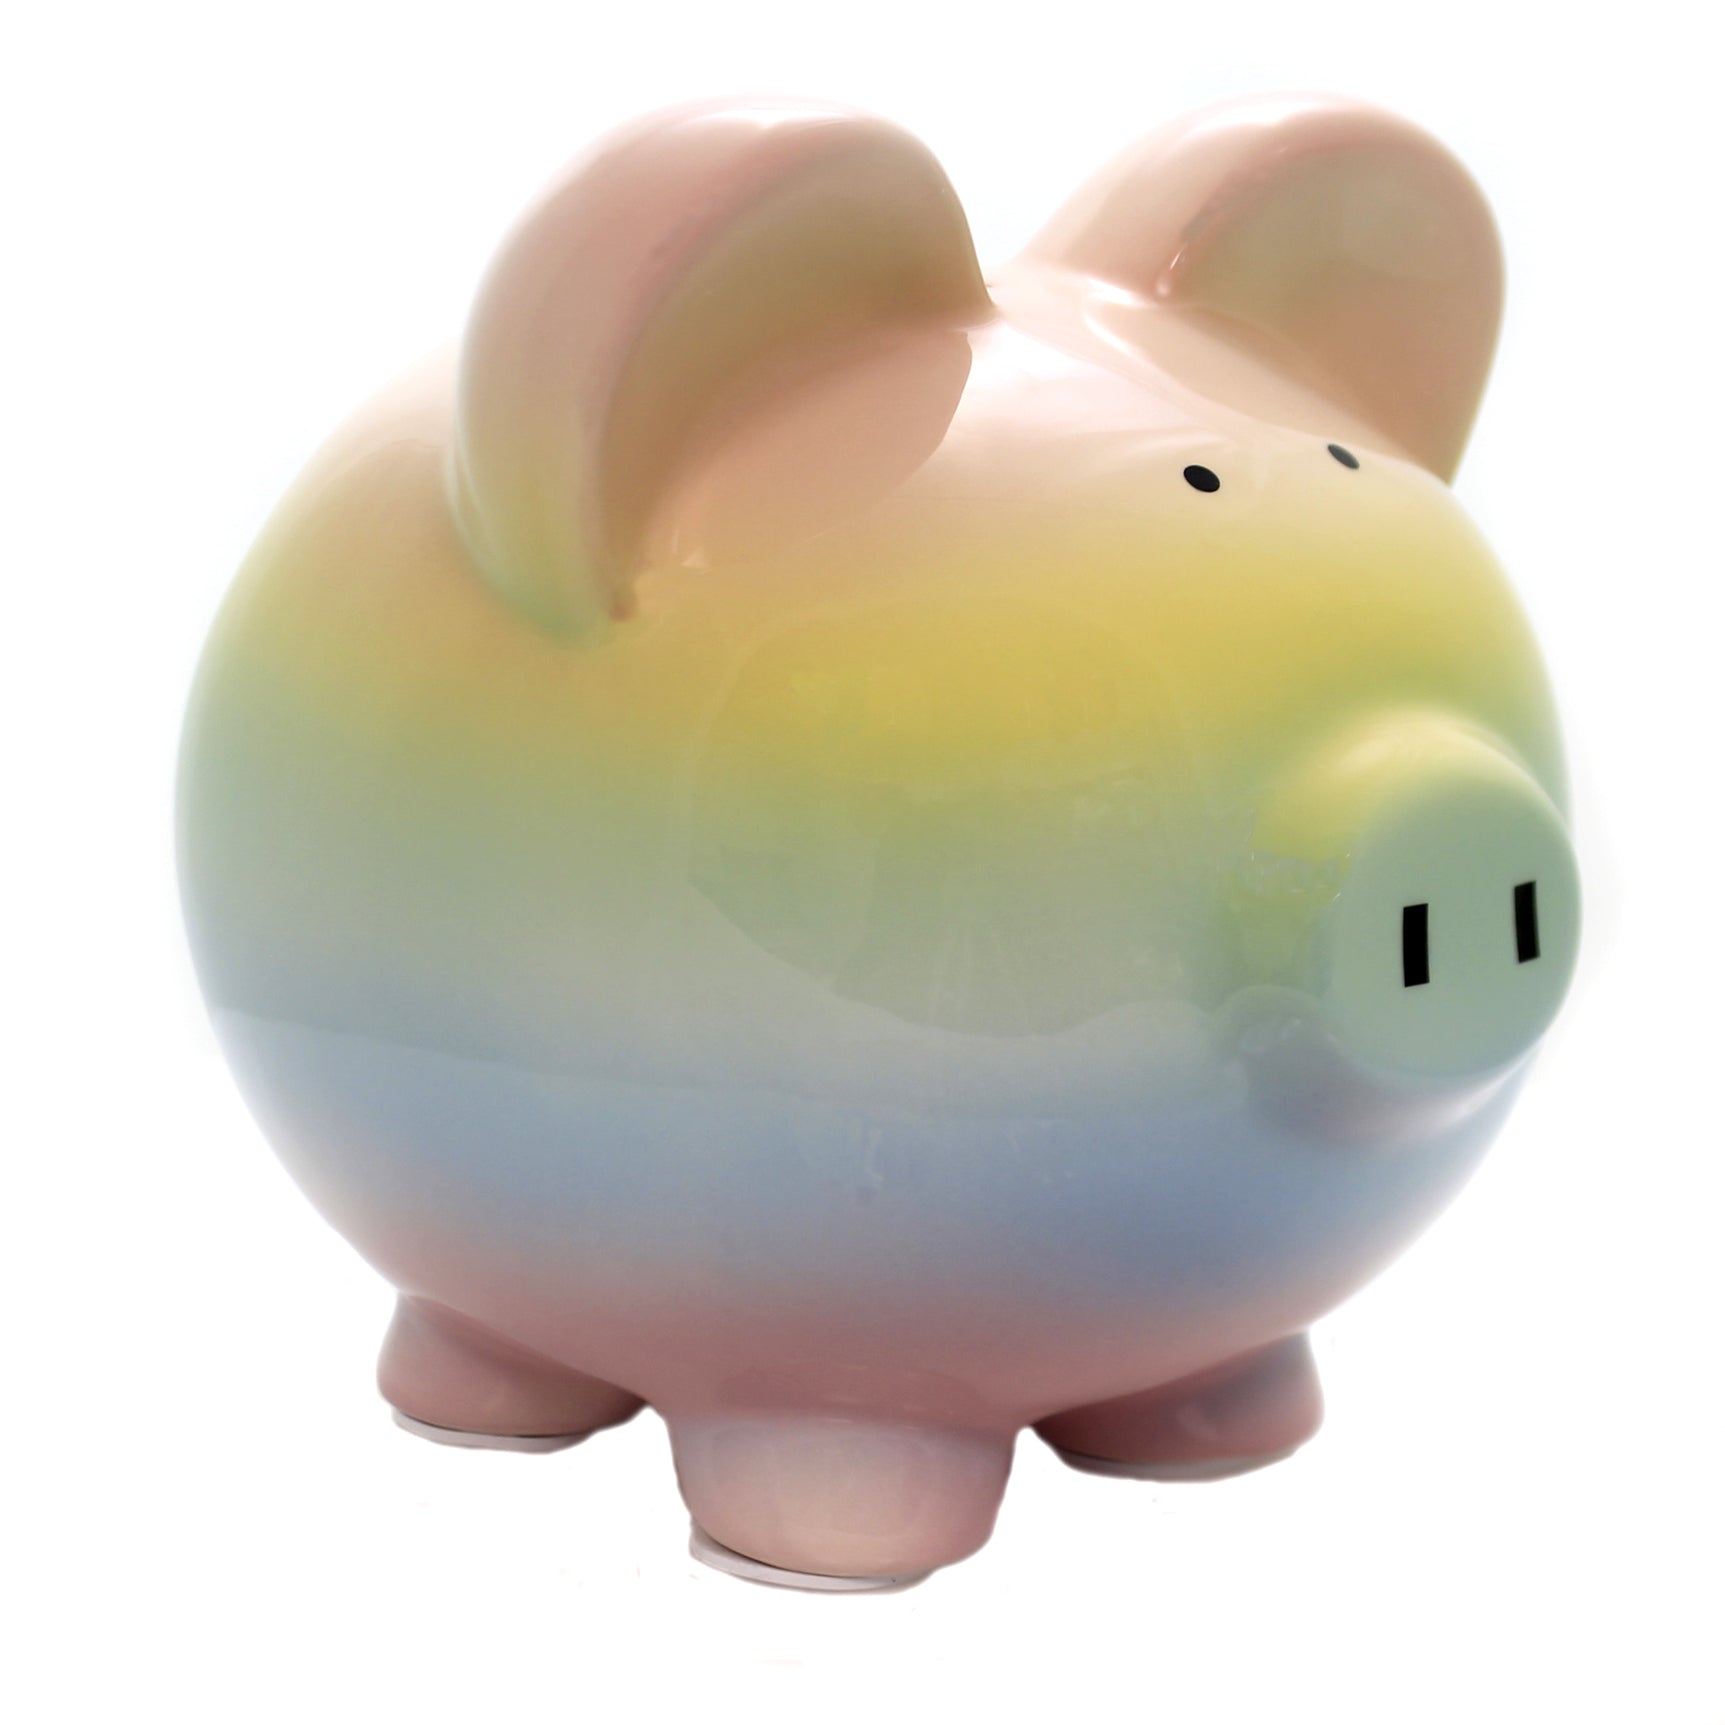 Child To Cherish Rainbow Ombre Bank - One Bank 7.75 Inch, Ceramic